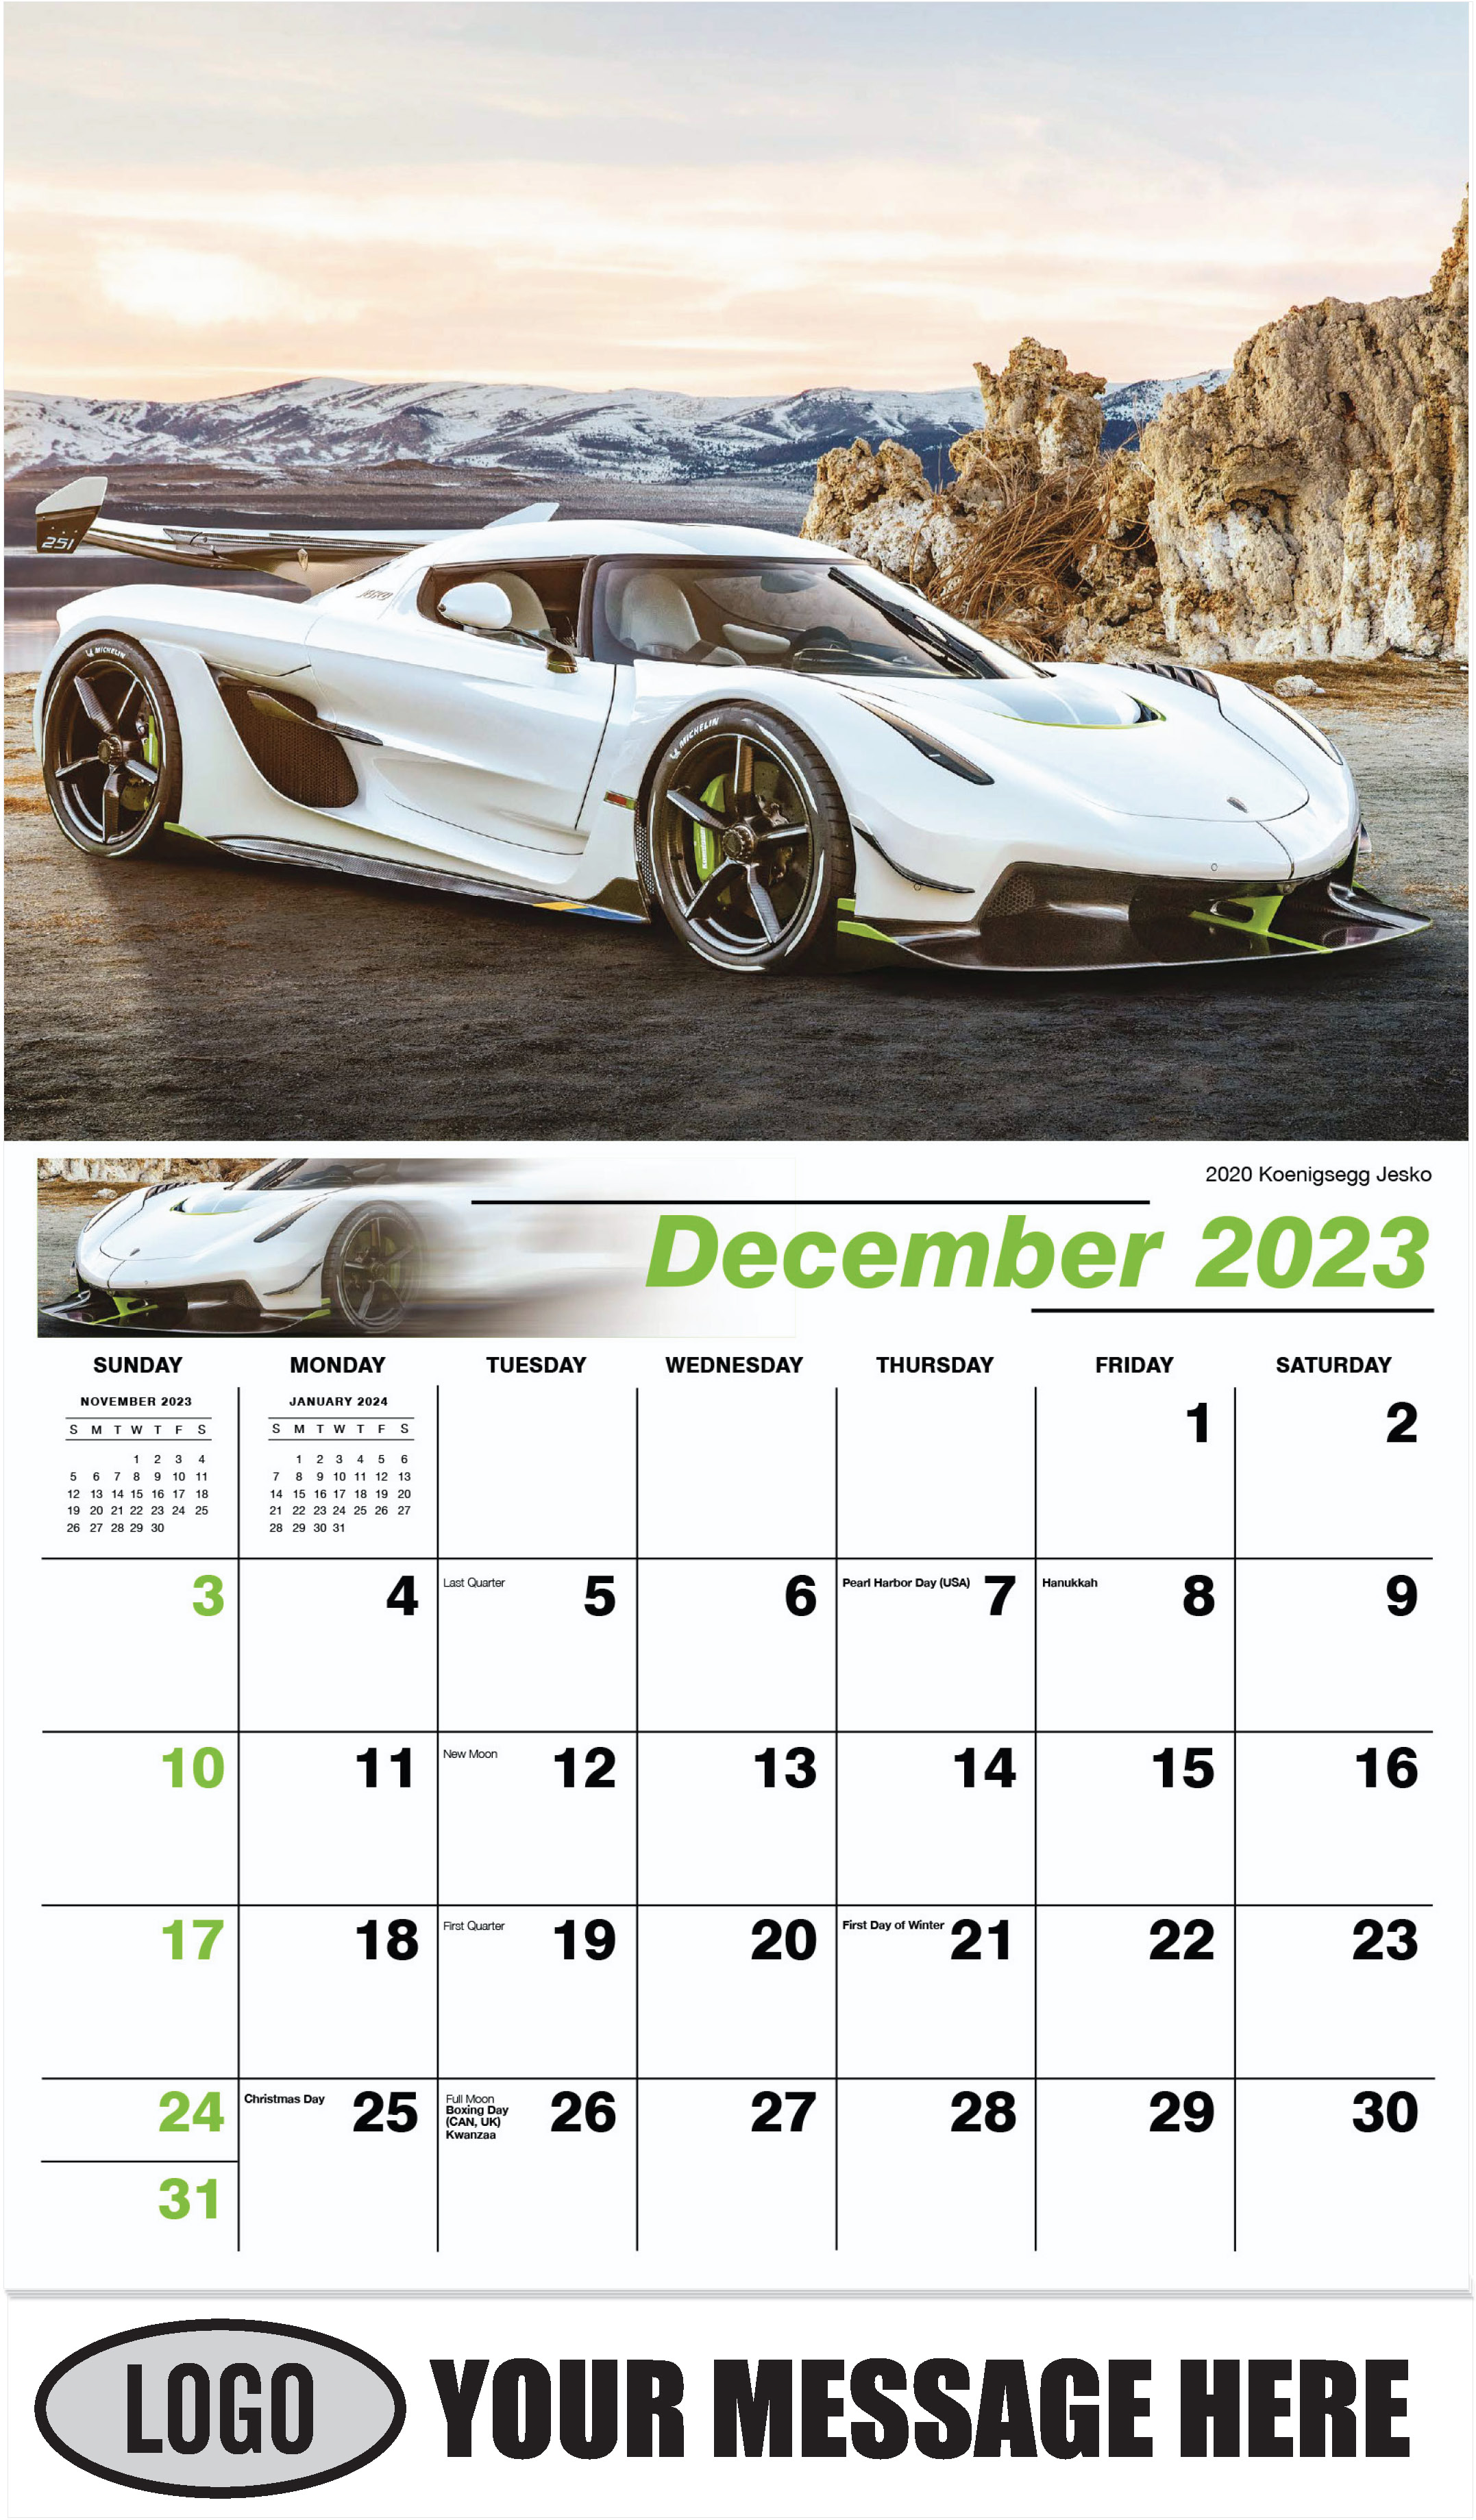 2020 Koenigsegg Jesko - December 2023 - Exotic Cars 2023 Promotional Calendar